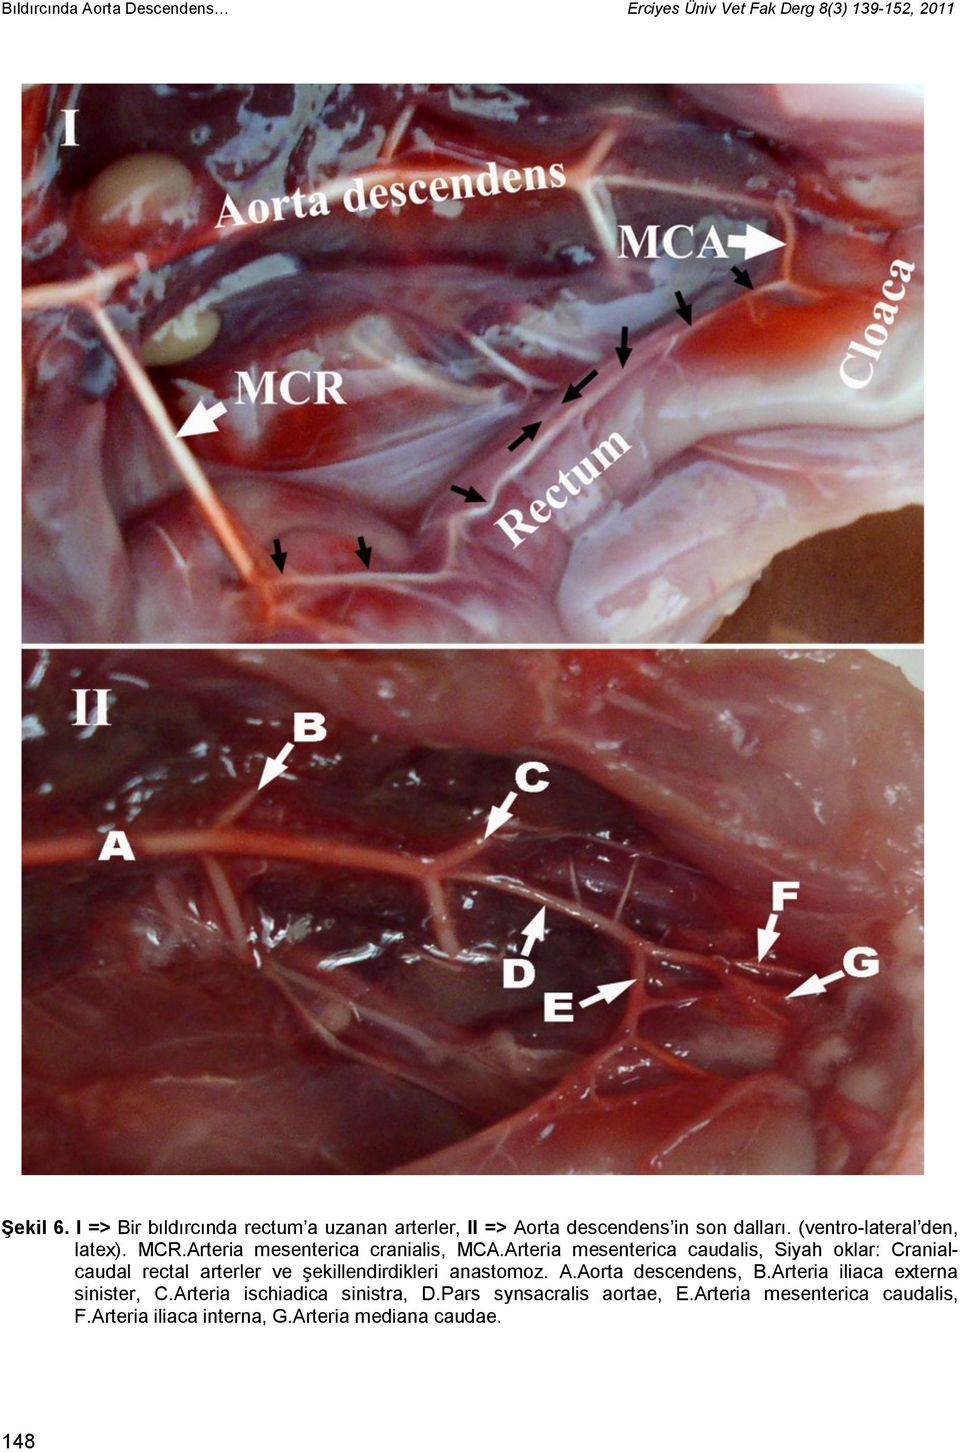 Arteria mesenterica cranialis, MCA.